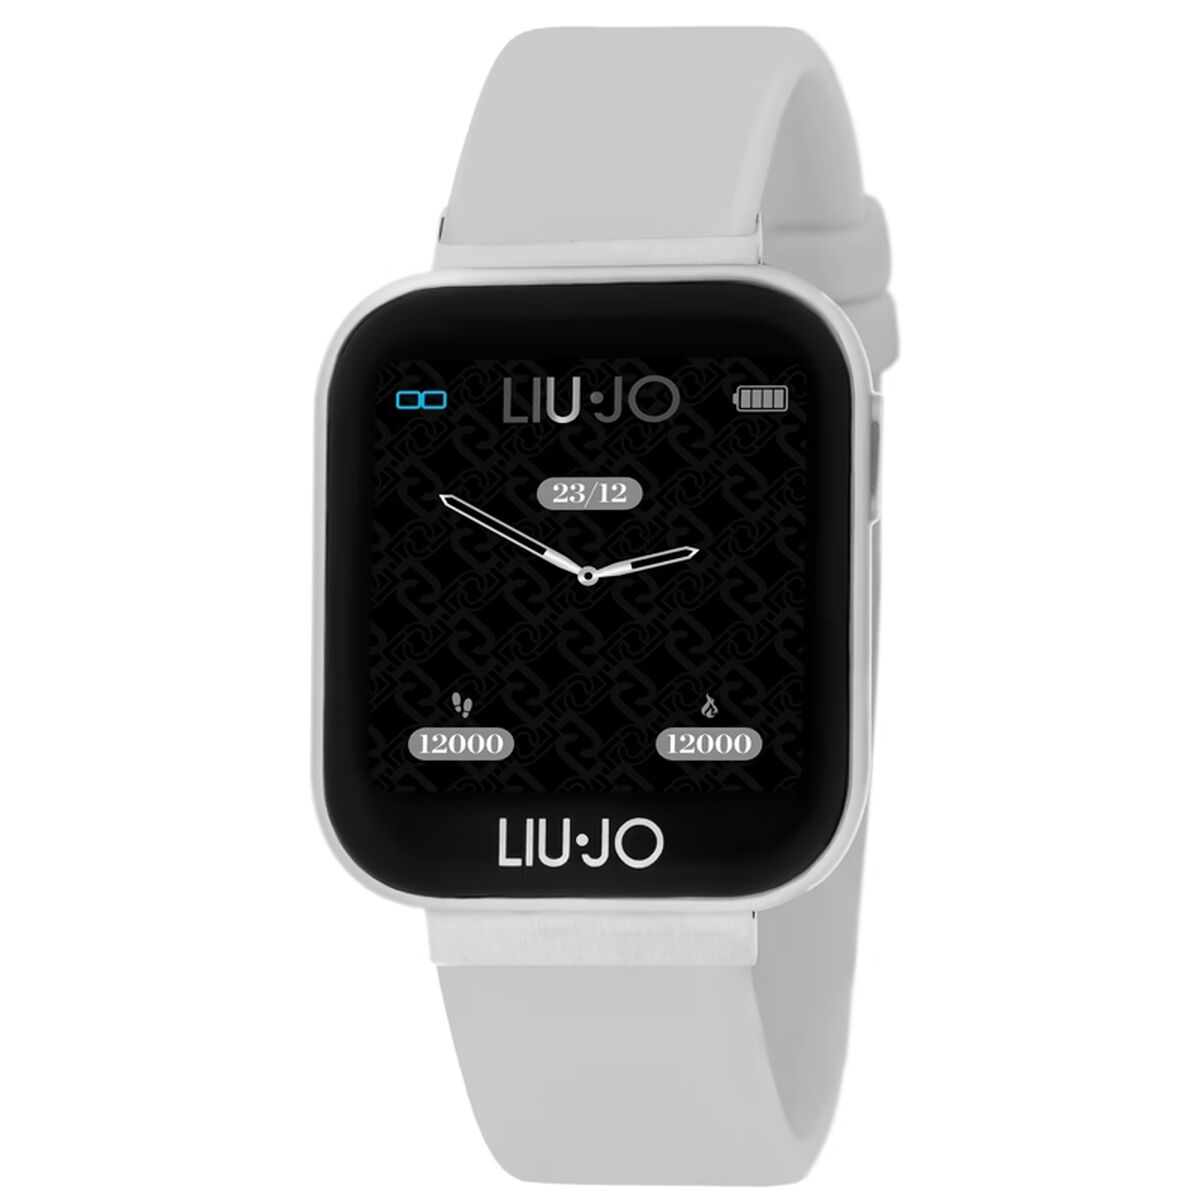 Kaufe Smartwatch LIU JO SWLJ101 bei AWK Flagship um € 145.00